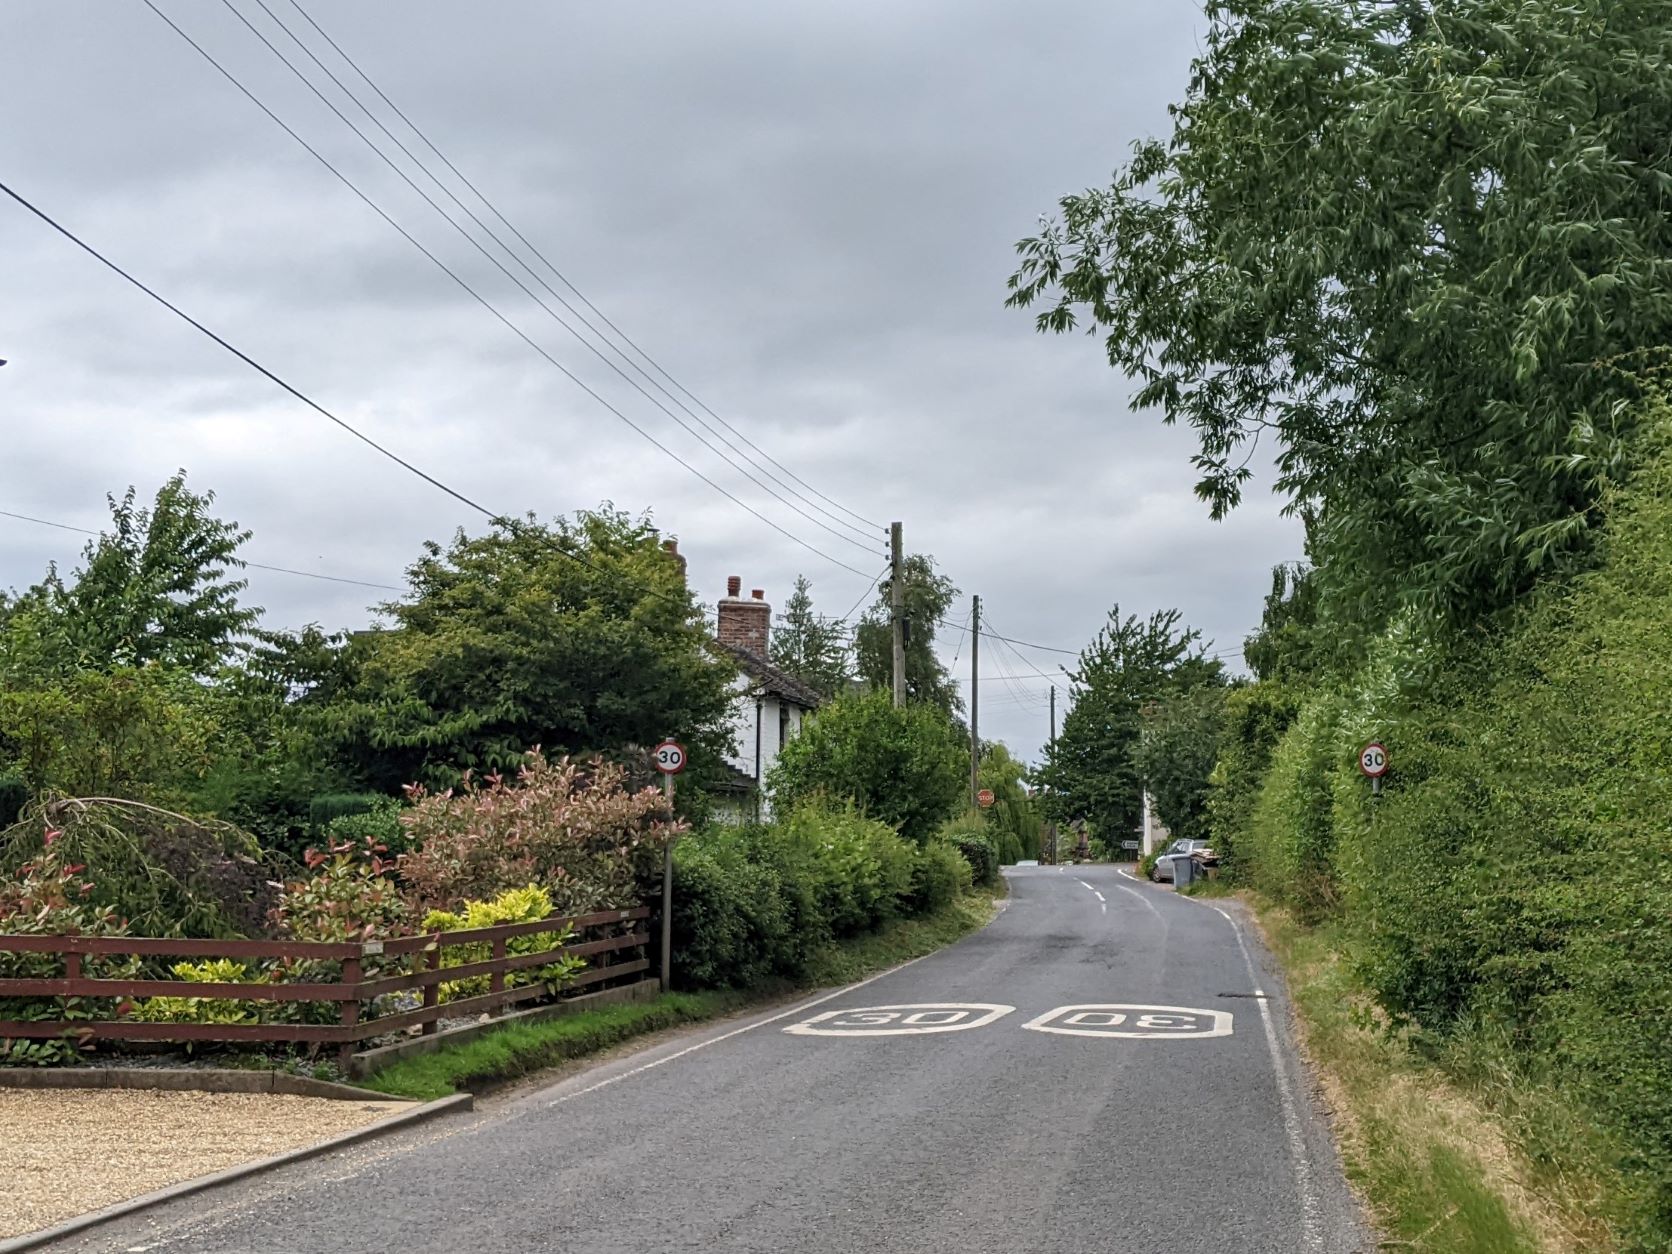 Longhill Lane approaching the main road, June 2022